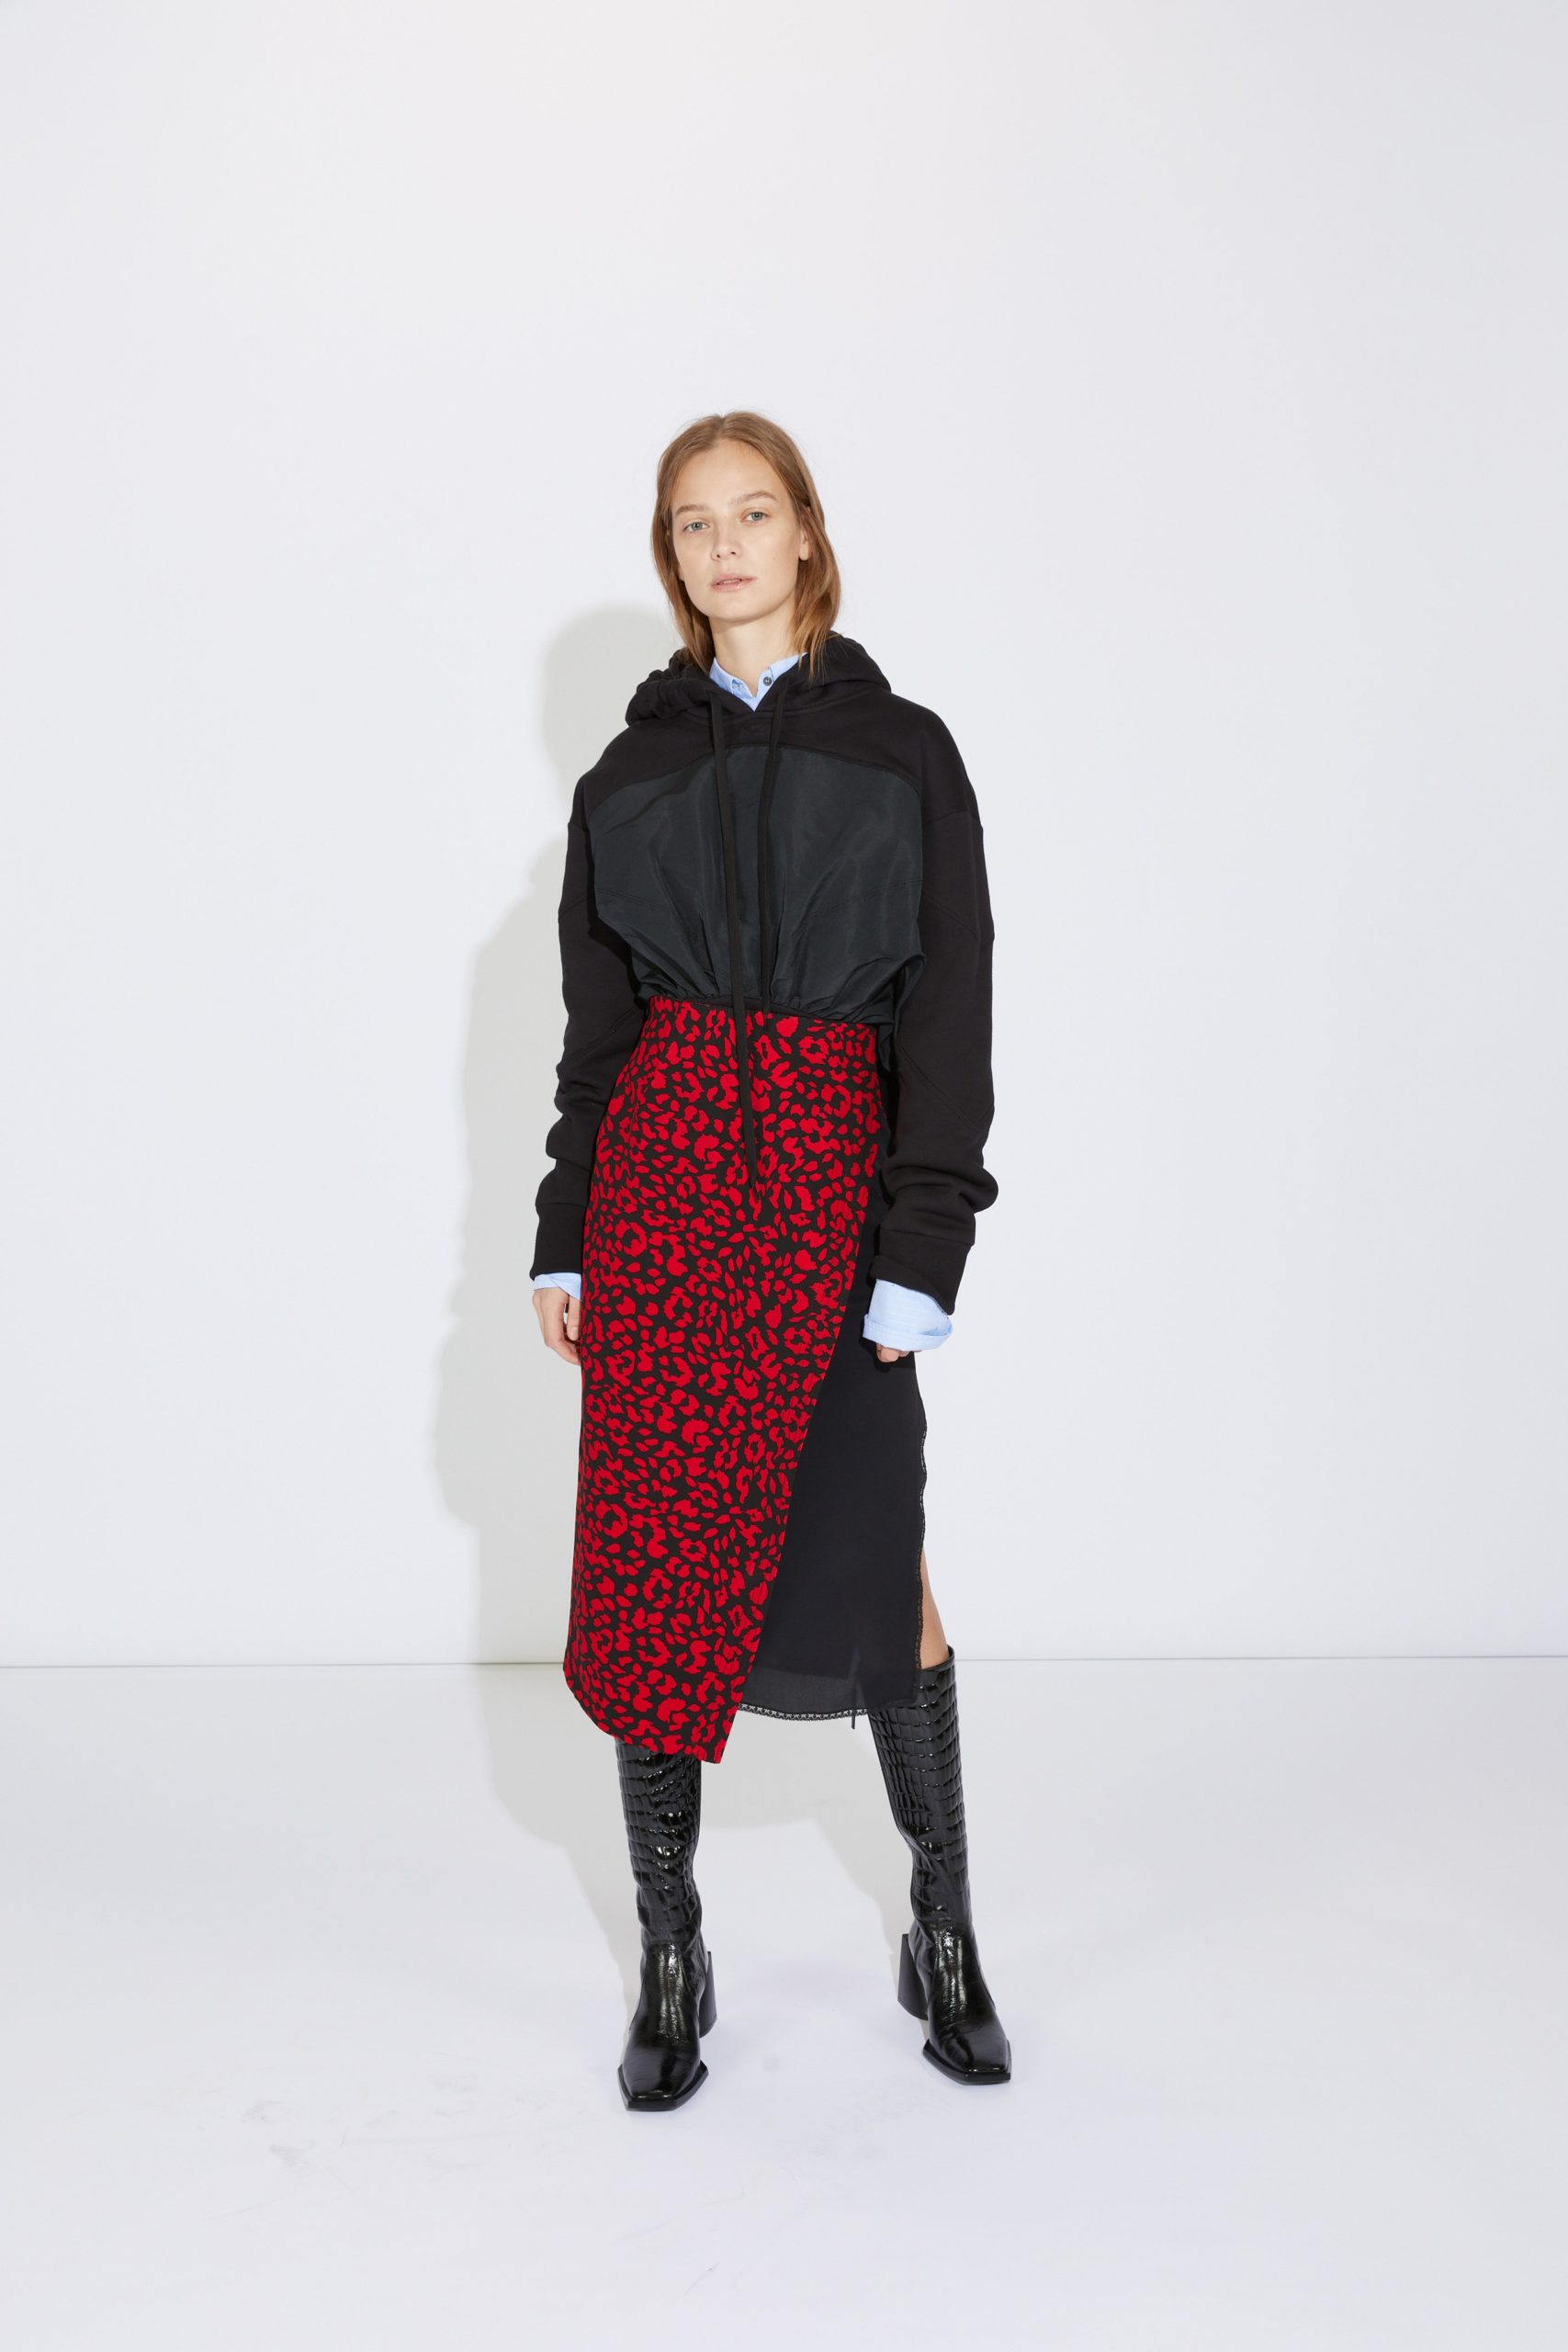 Trend Alert: Wrap Skirt 2020 - The Fashion Folks